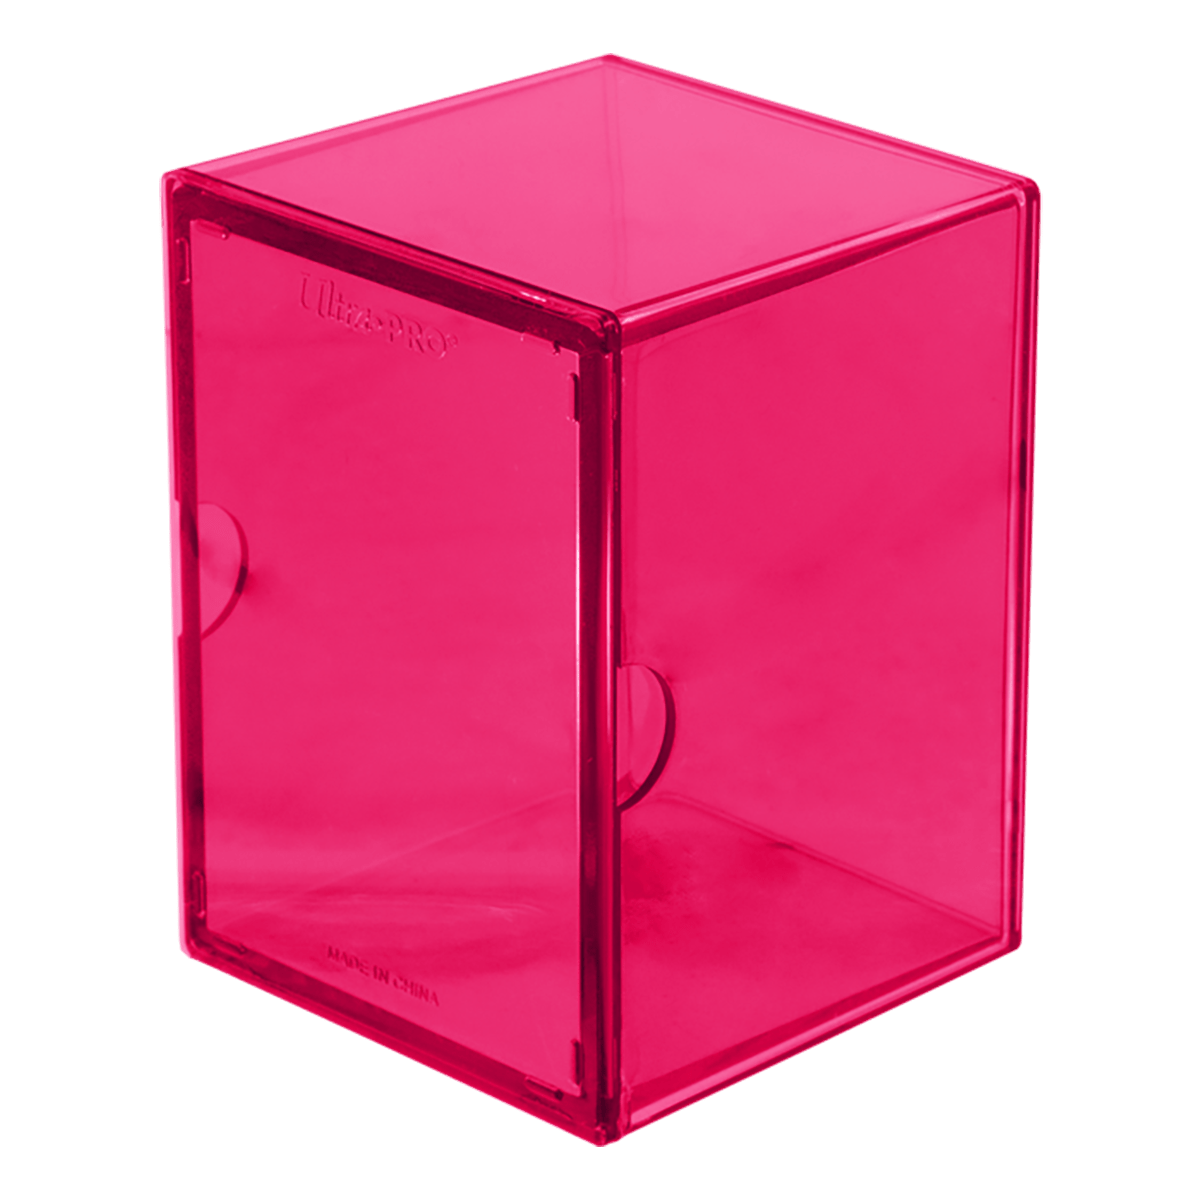 Ultra Pro Eclipse 2 Piece Deck Box 100+ Hot Pink - Gamescape